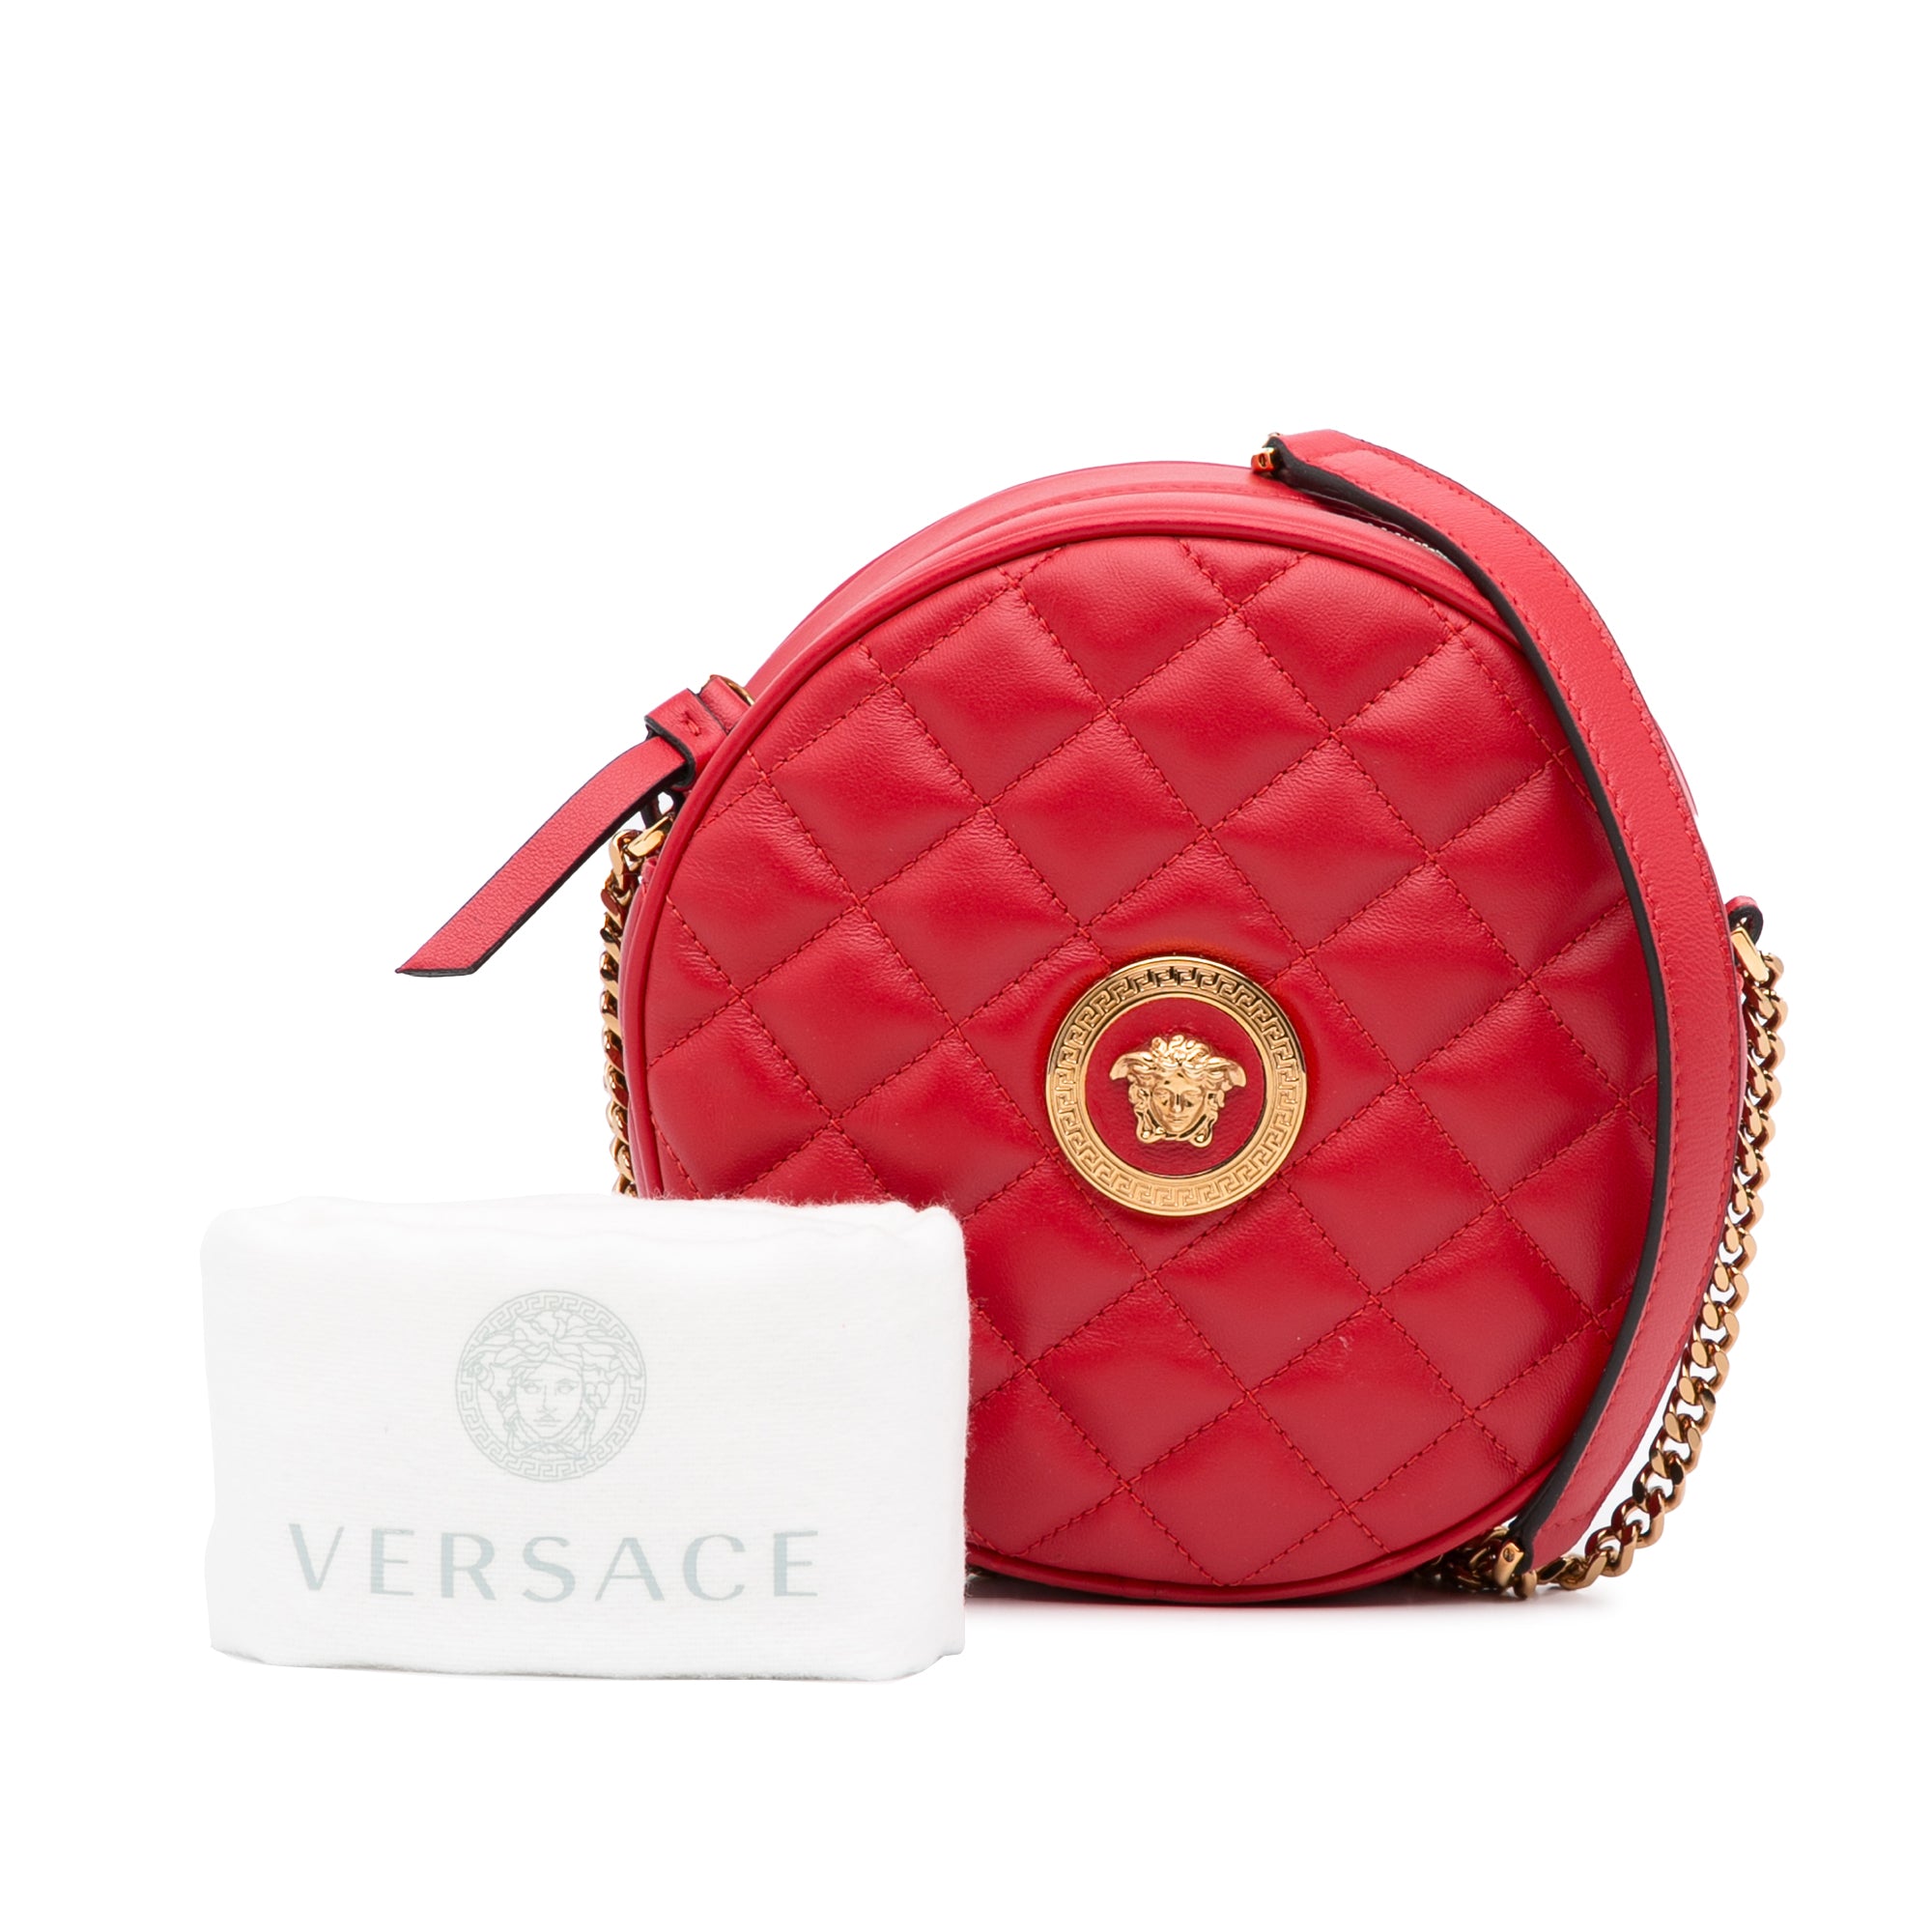 Versace Authenticated Leather Handbag